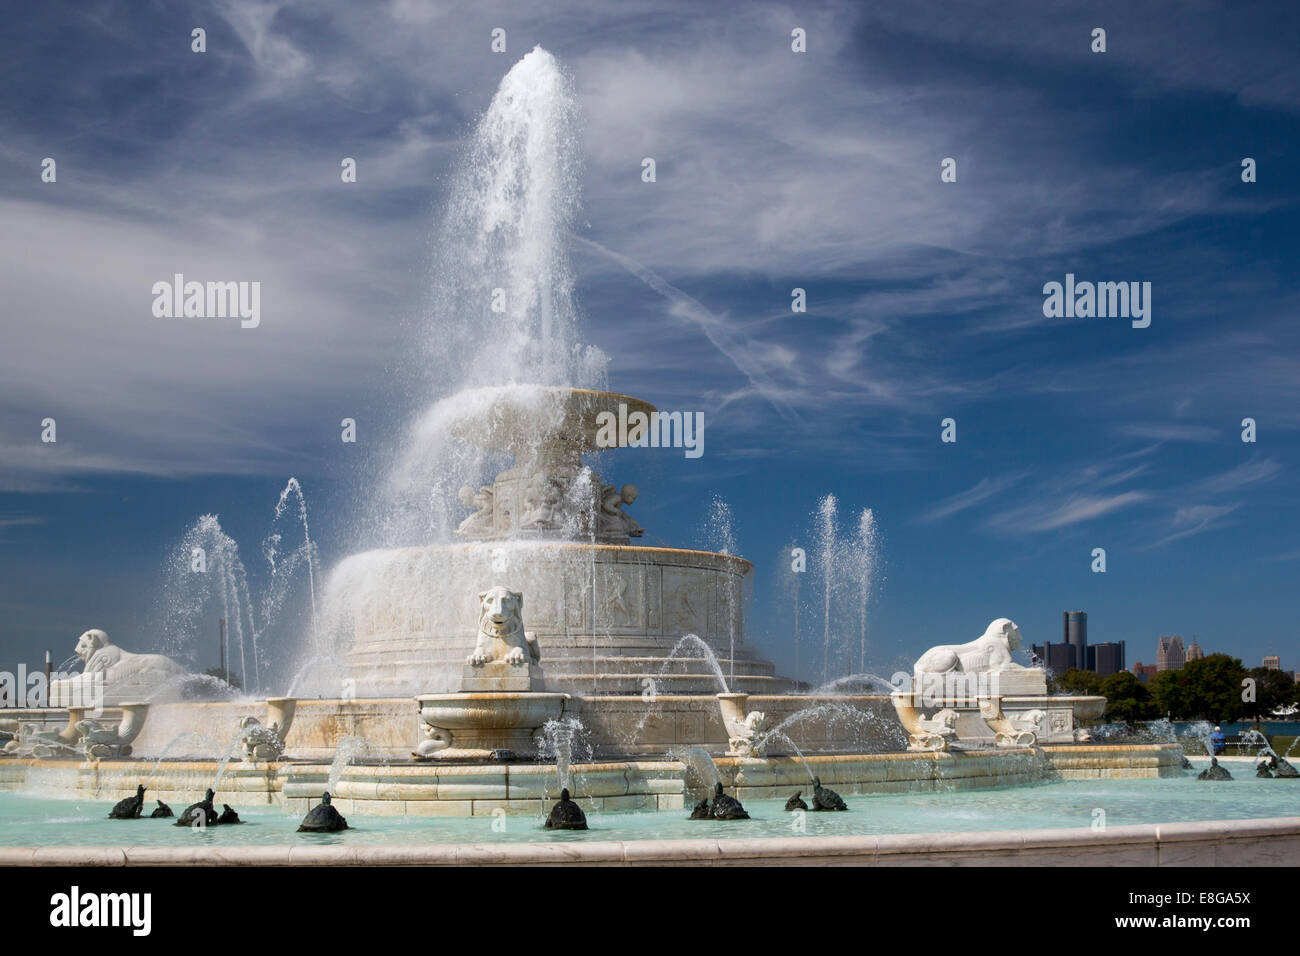 Detroit, Michigan - The James Scott Memorial Fountain on Belle Isle. Stock Photo